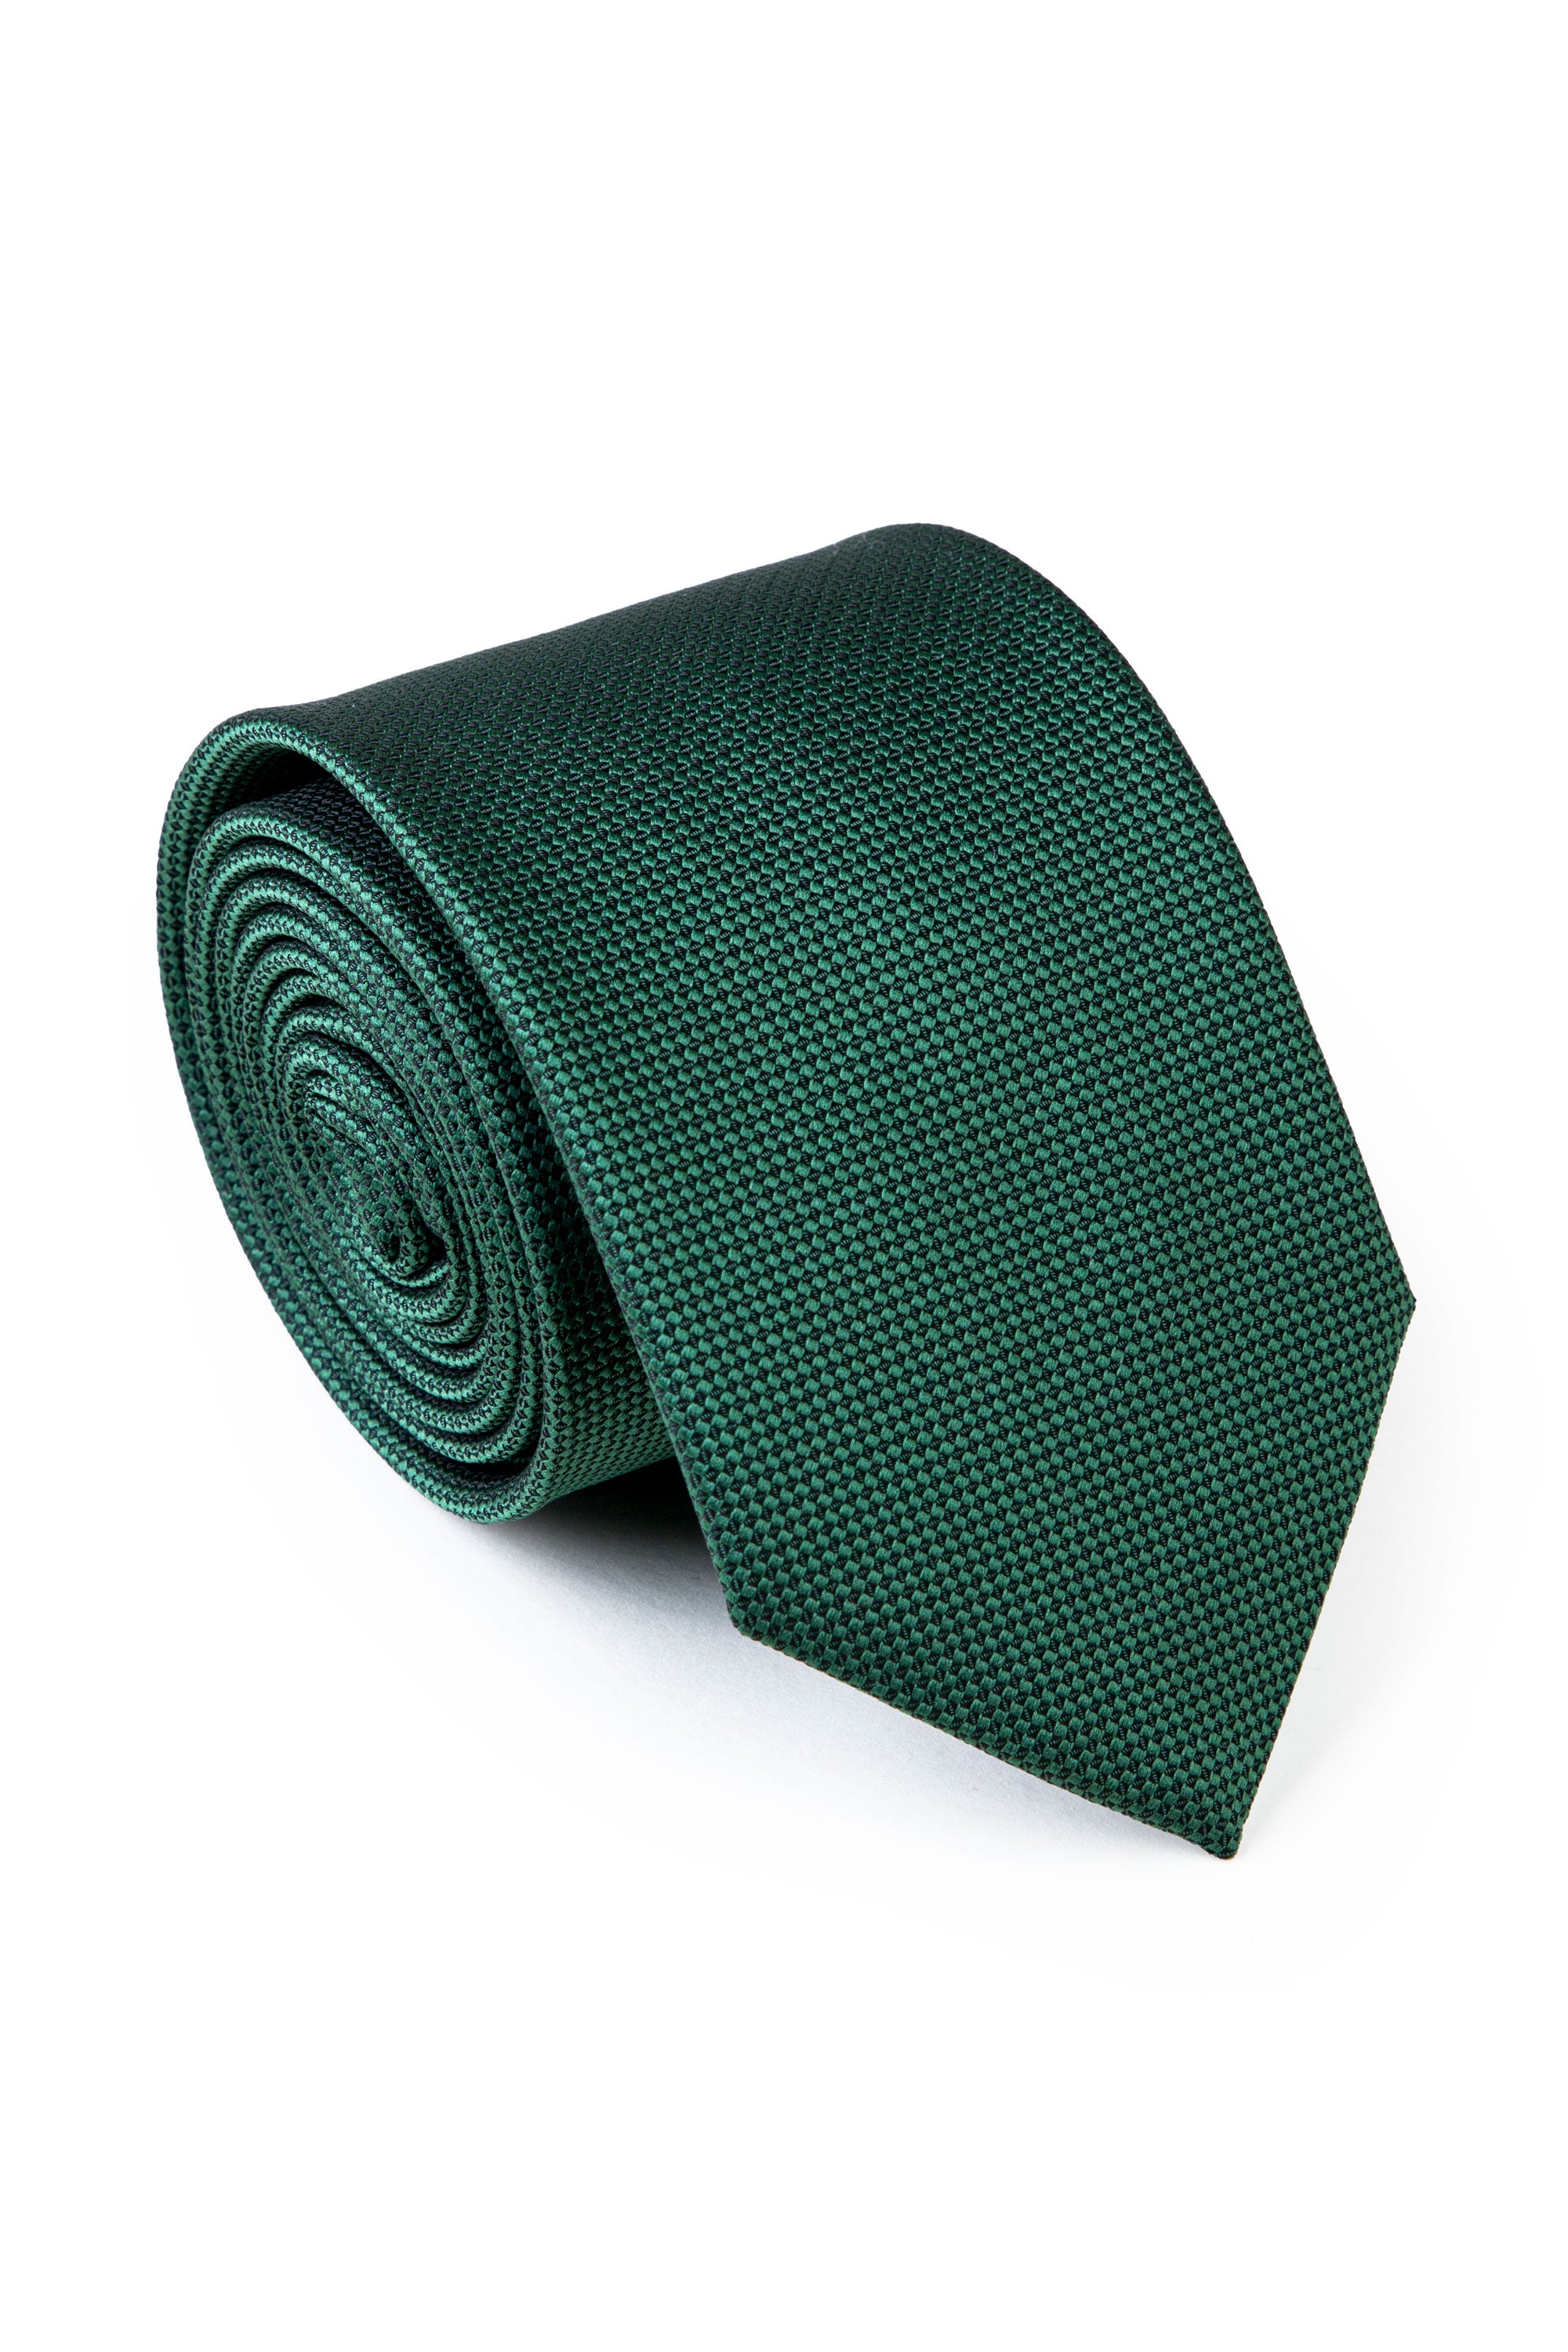 Formal Green Tie Loose